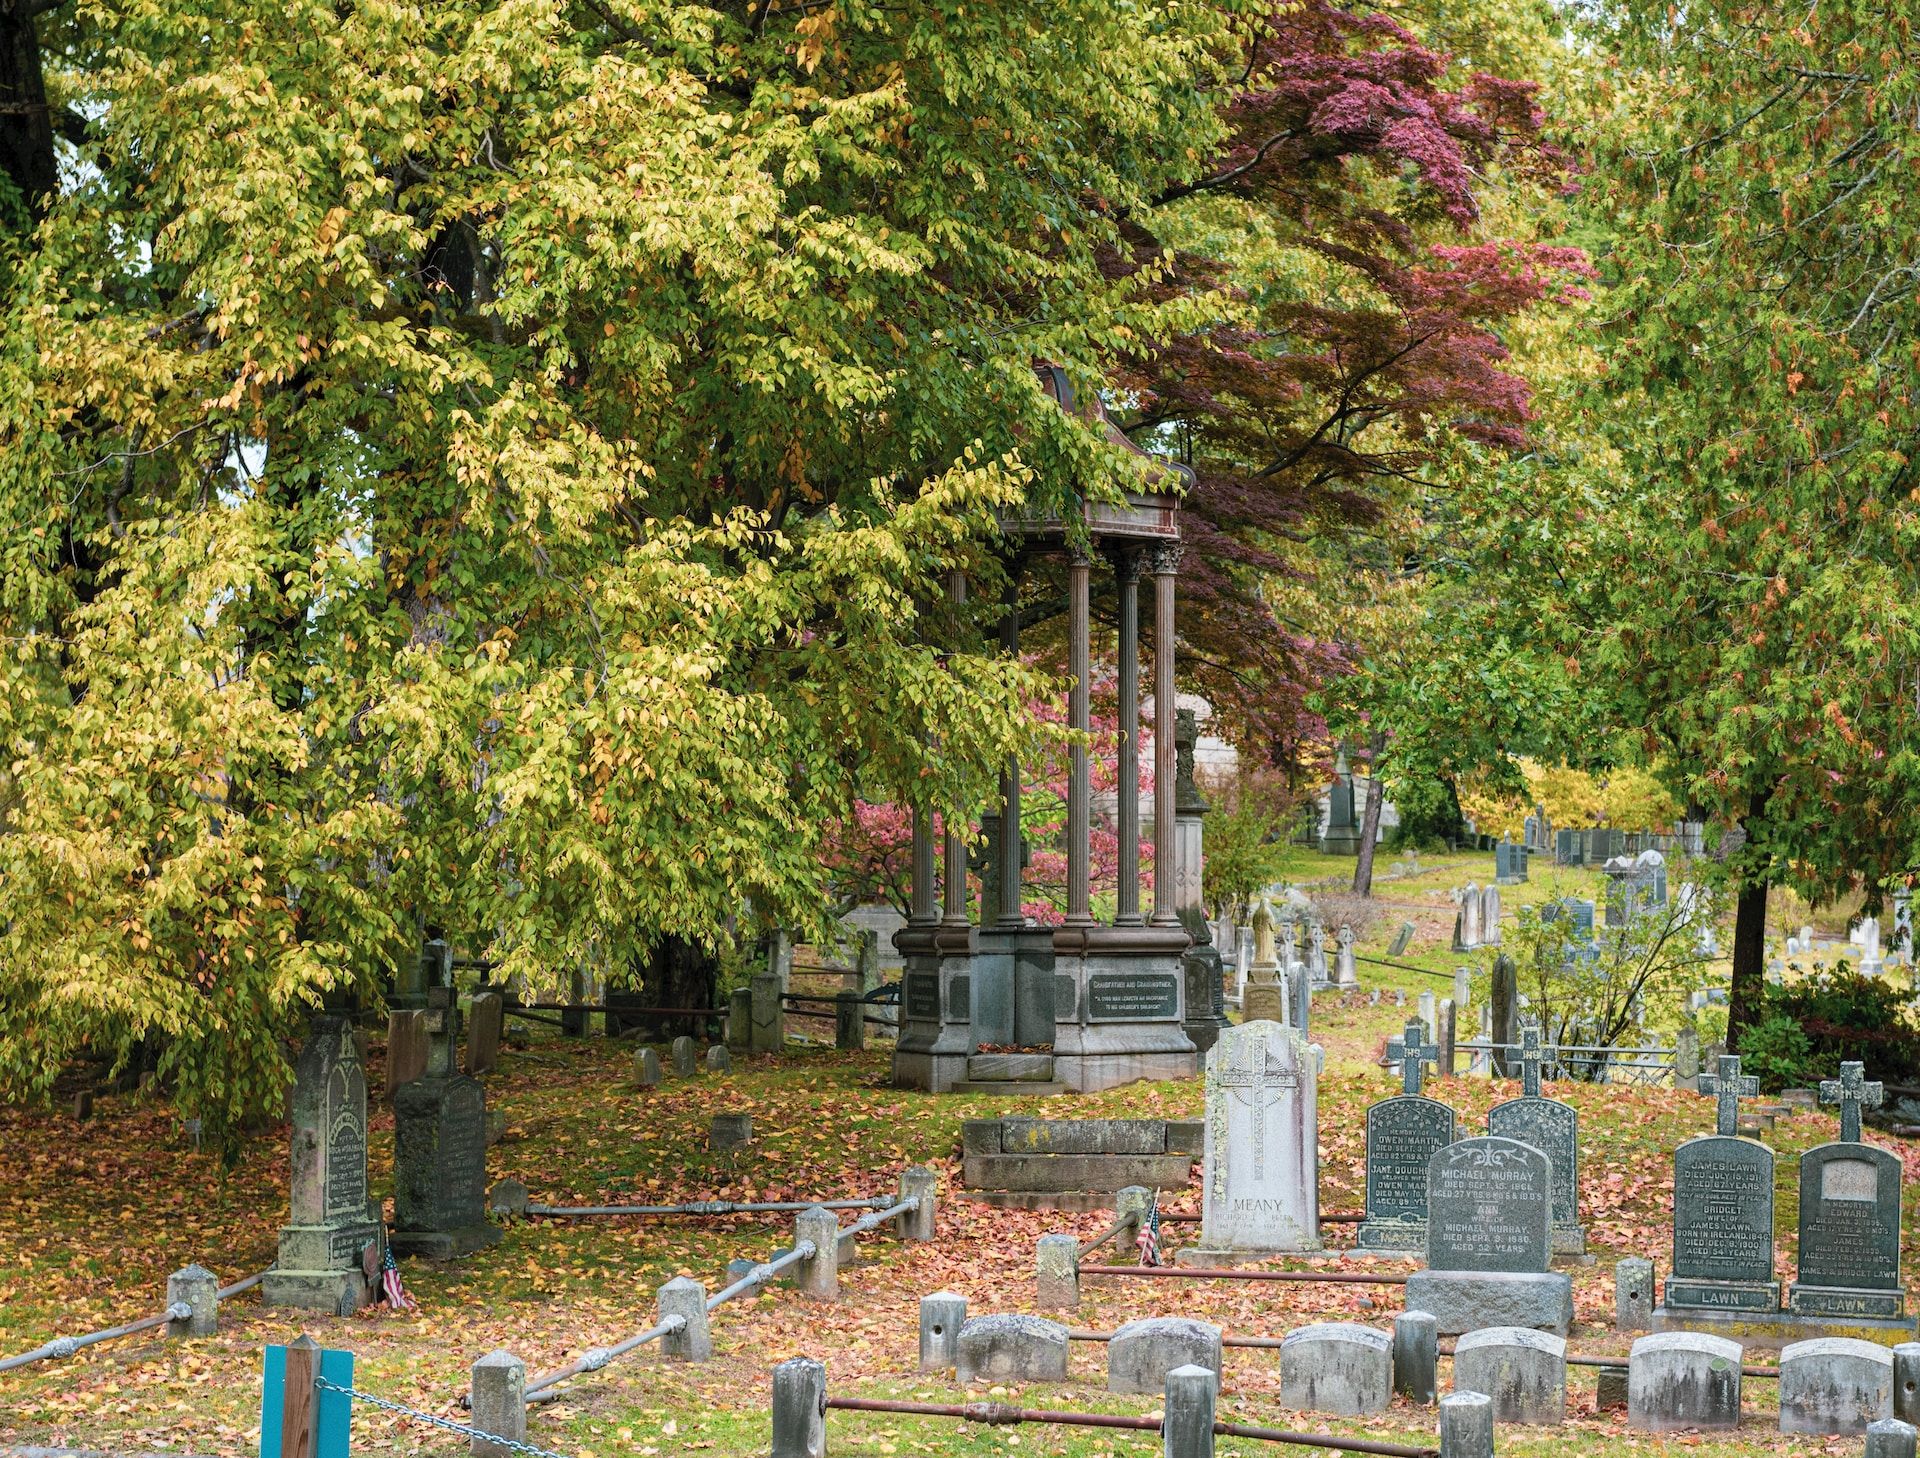 An autumnal shot of Sleepy Hollow's cemetery